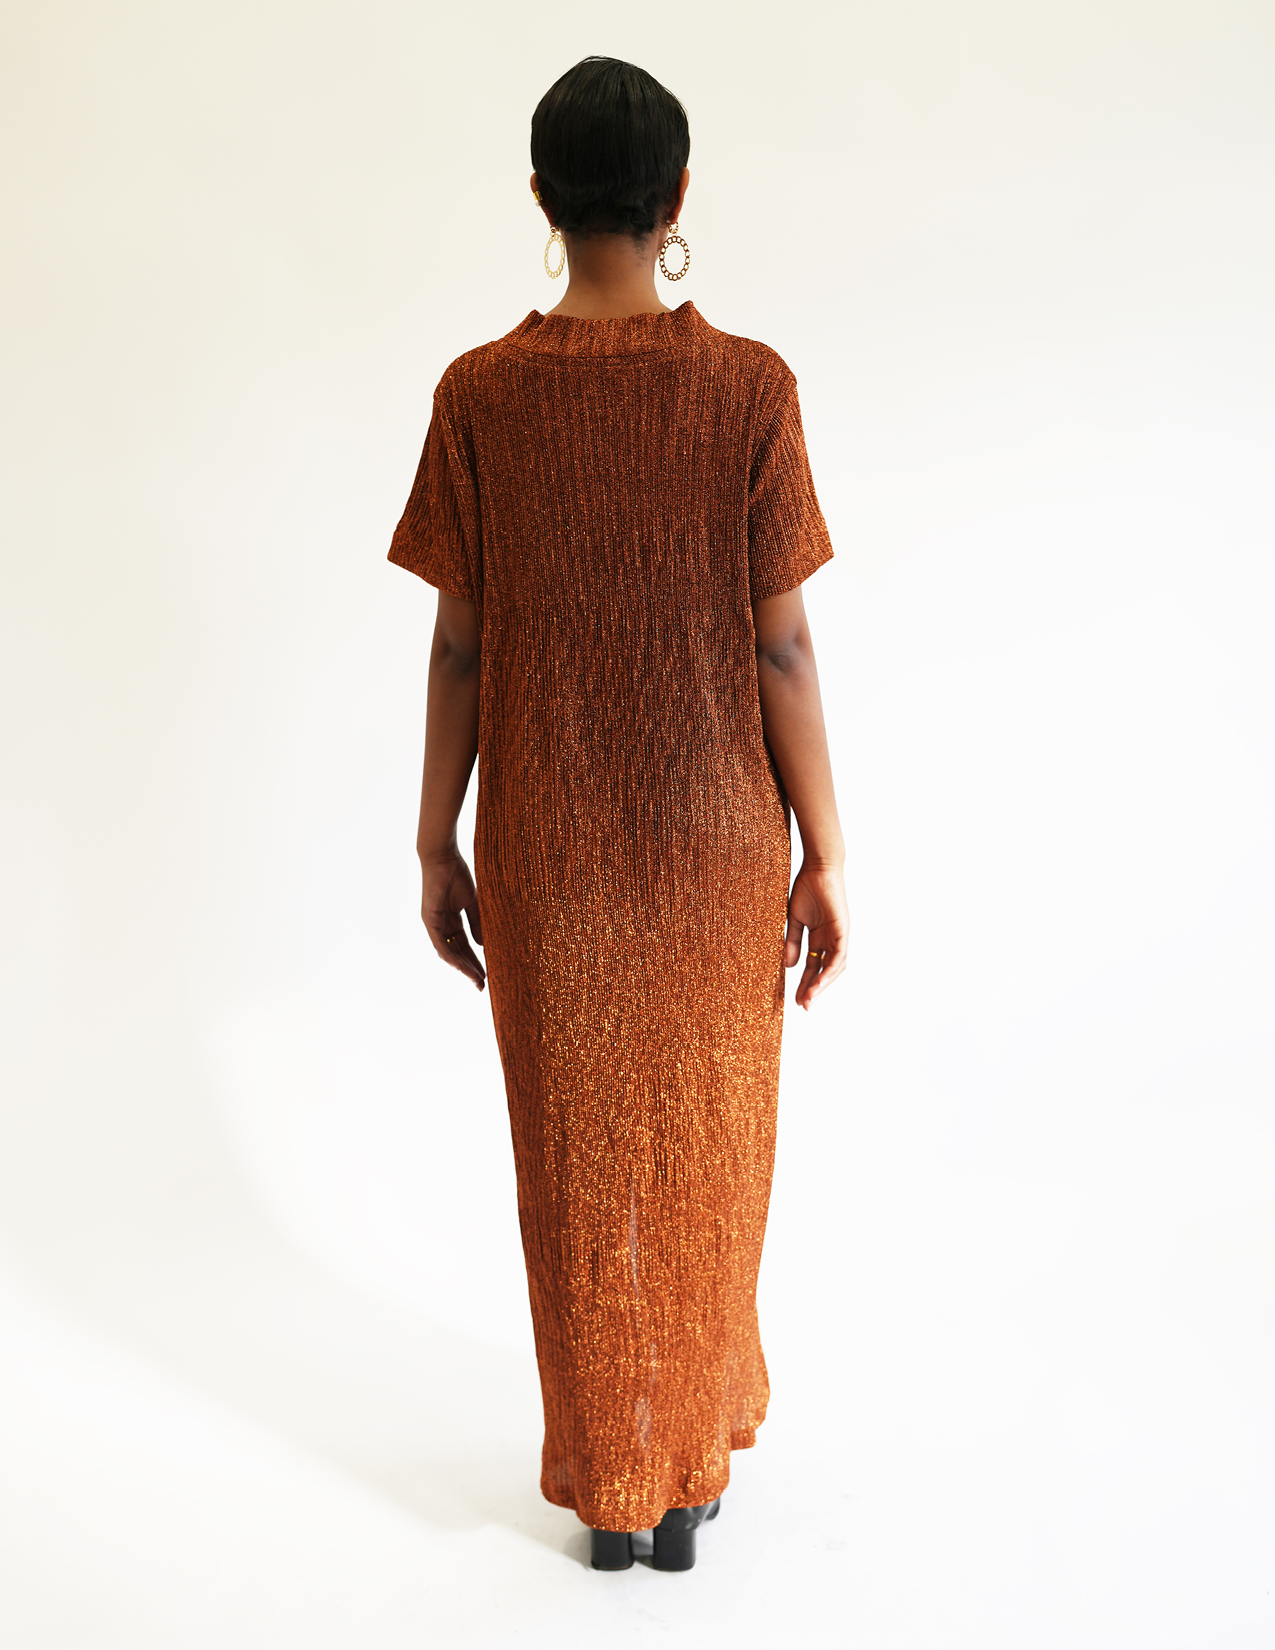 Erica X-Long Tee Copper Dress